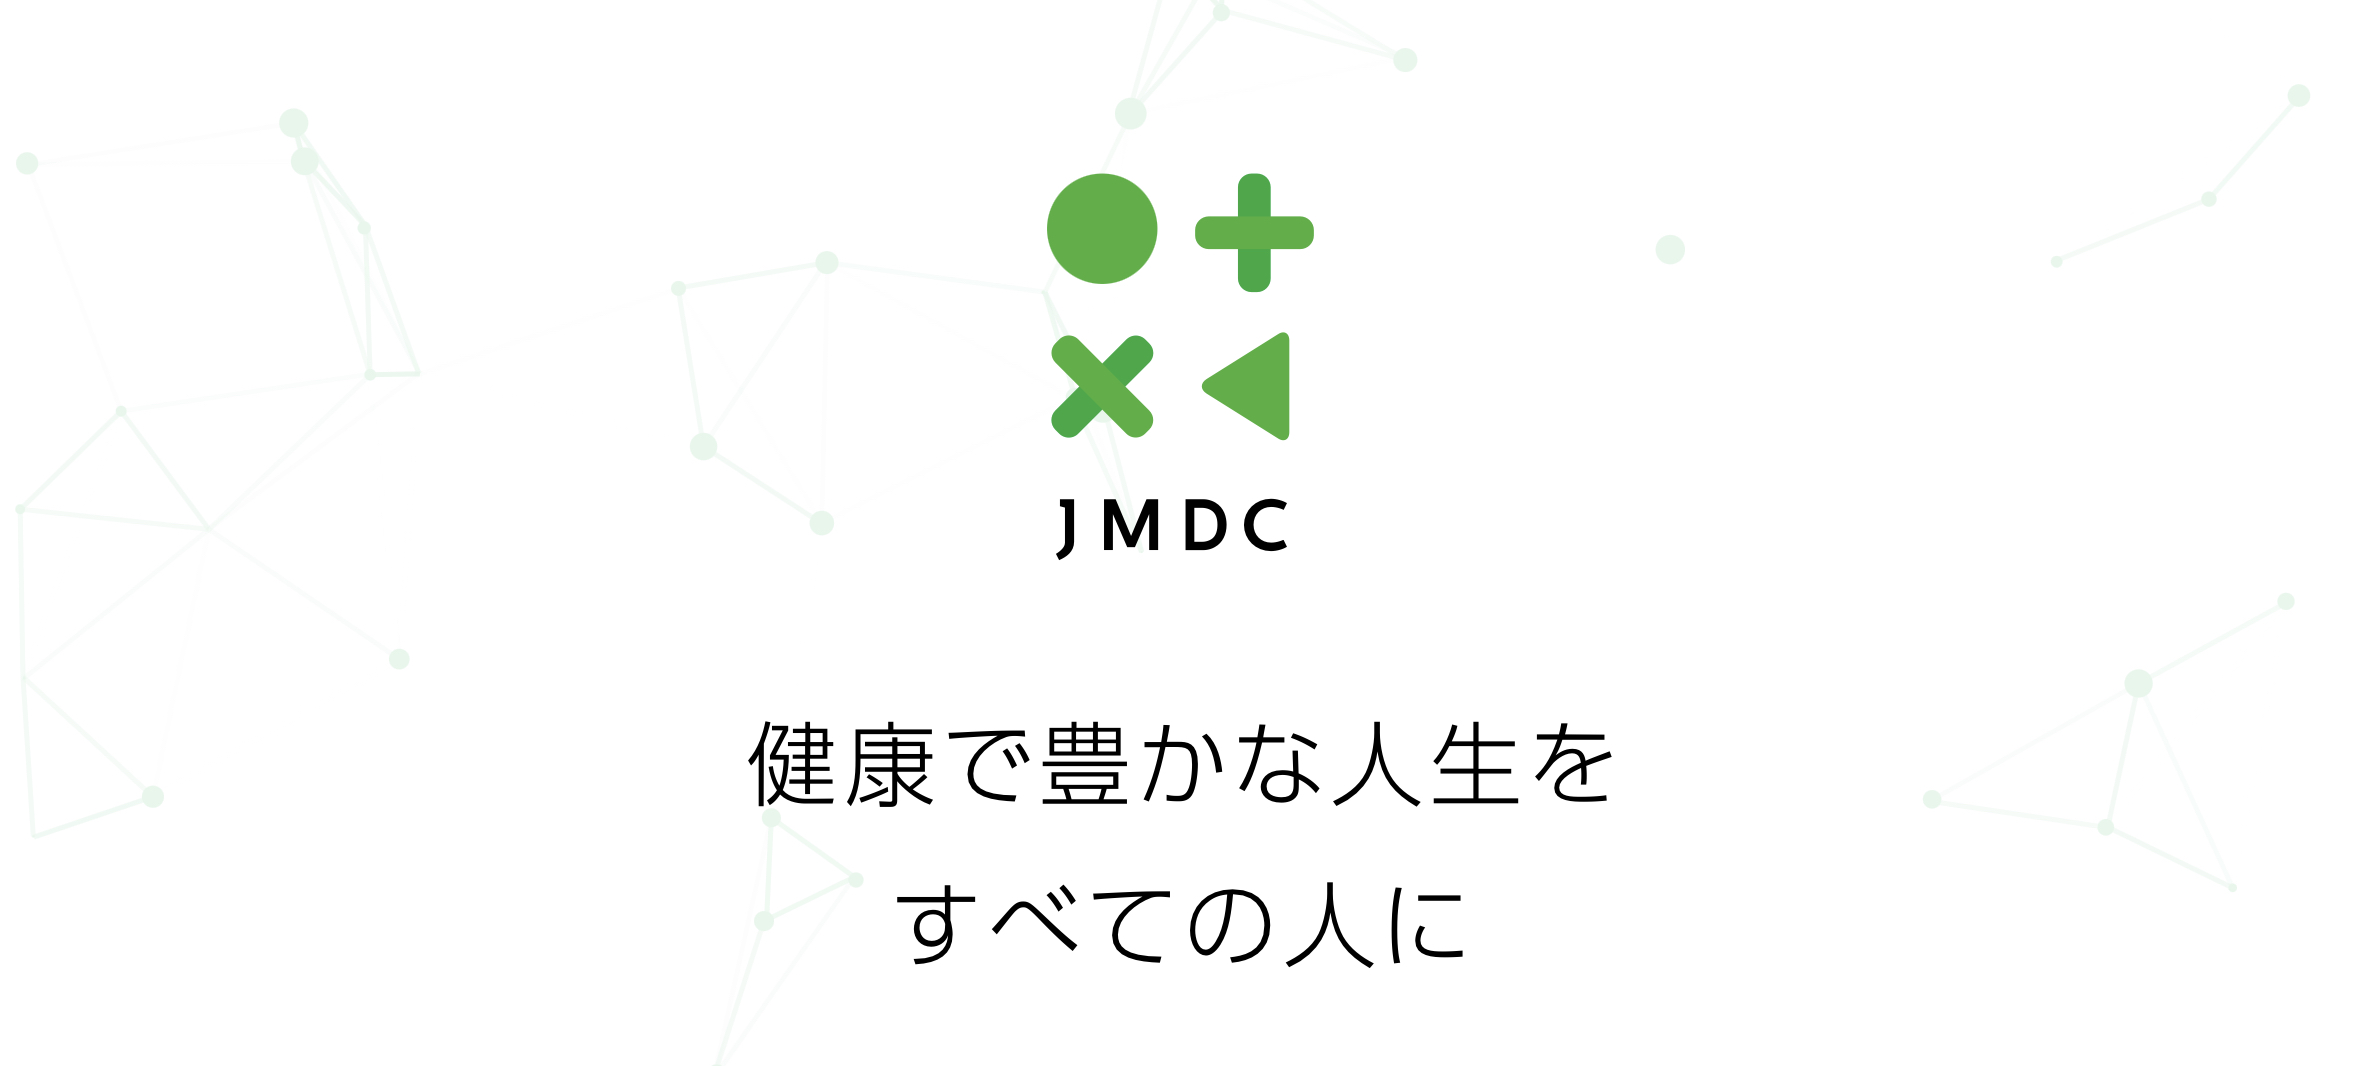 JMDClogo